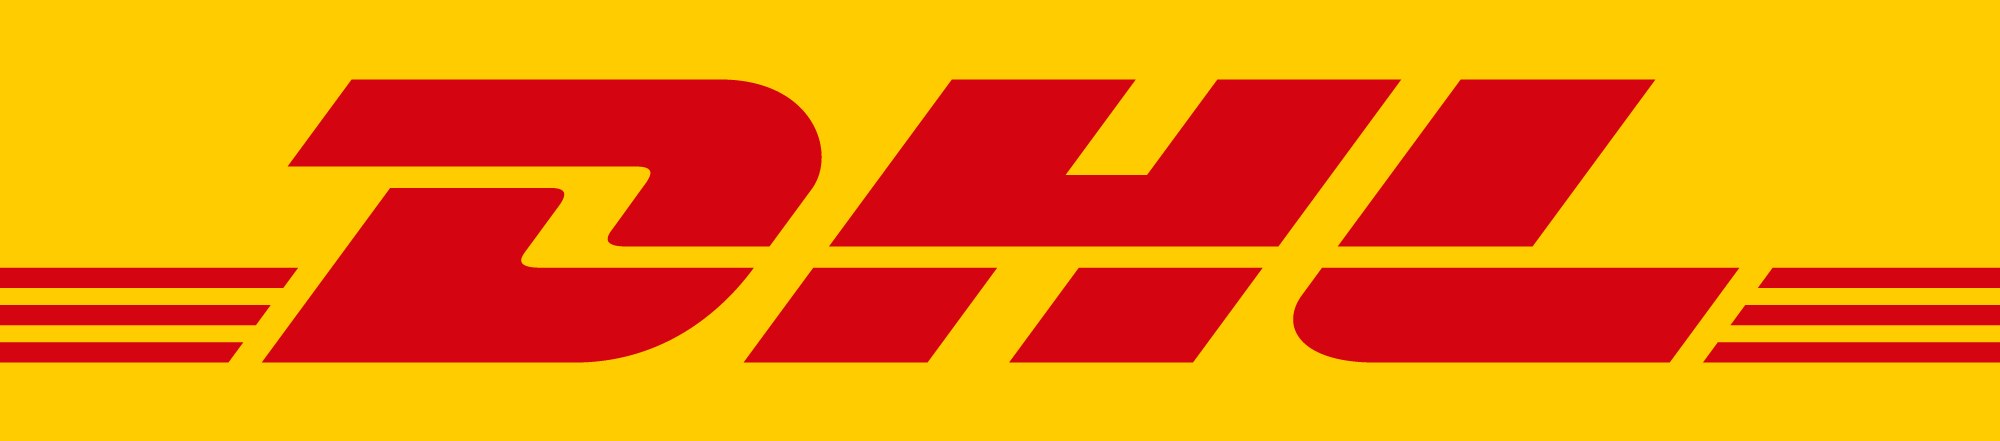 DHL_logo_rgb.png